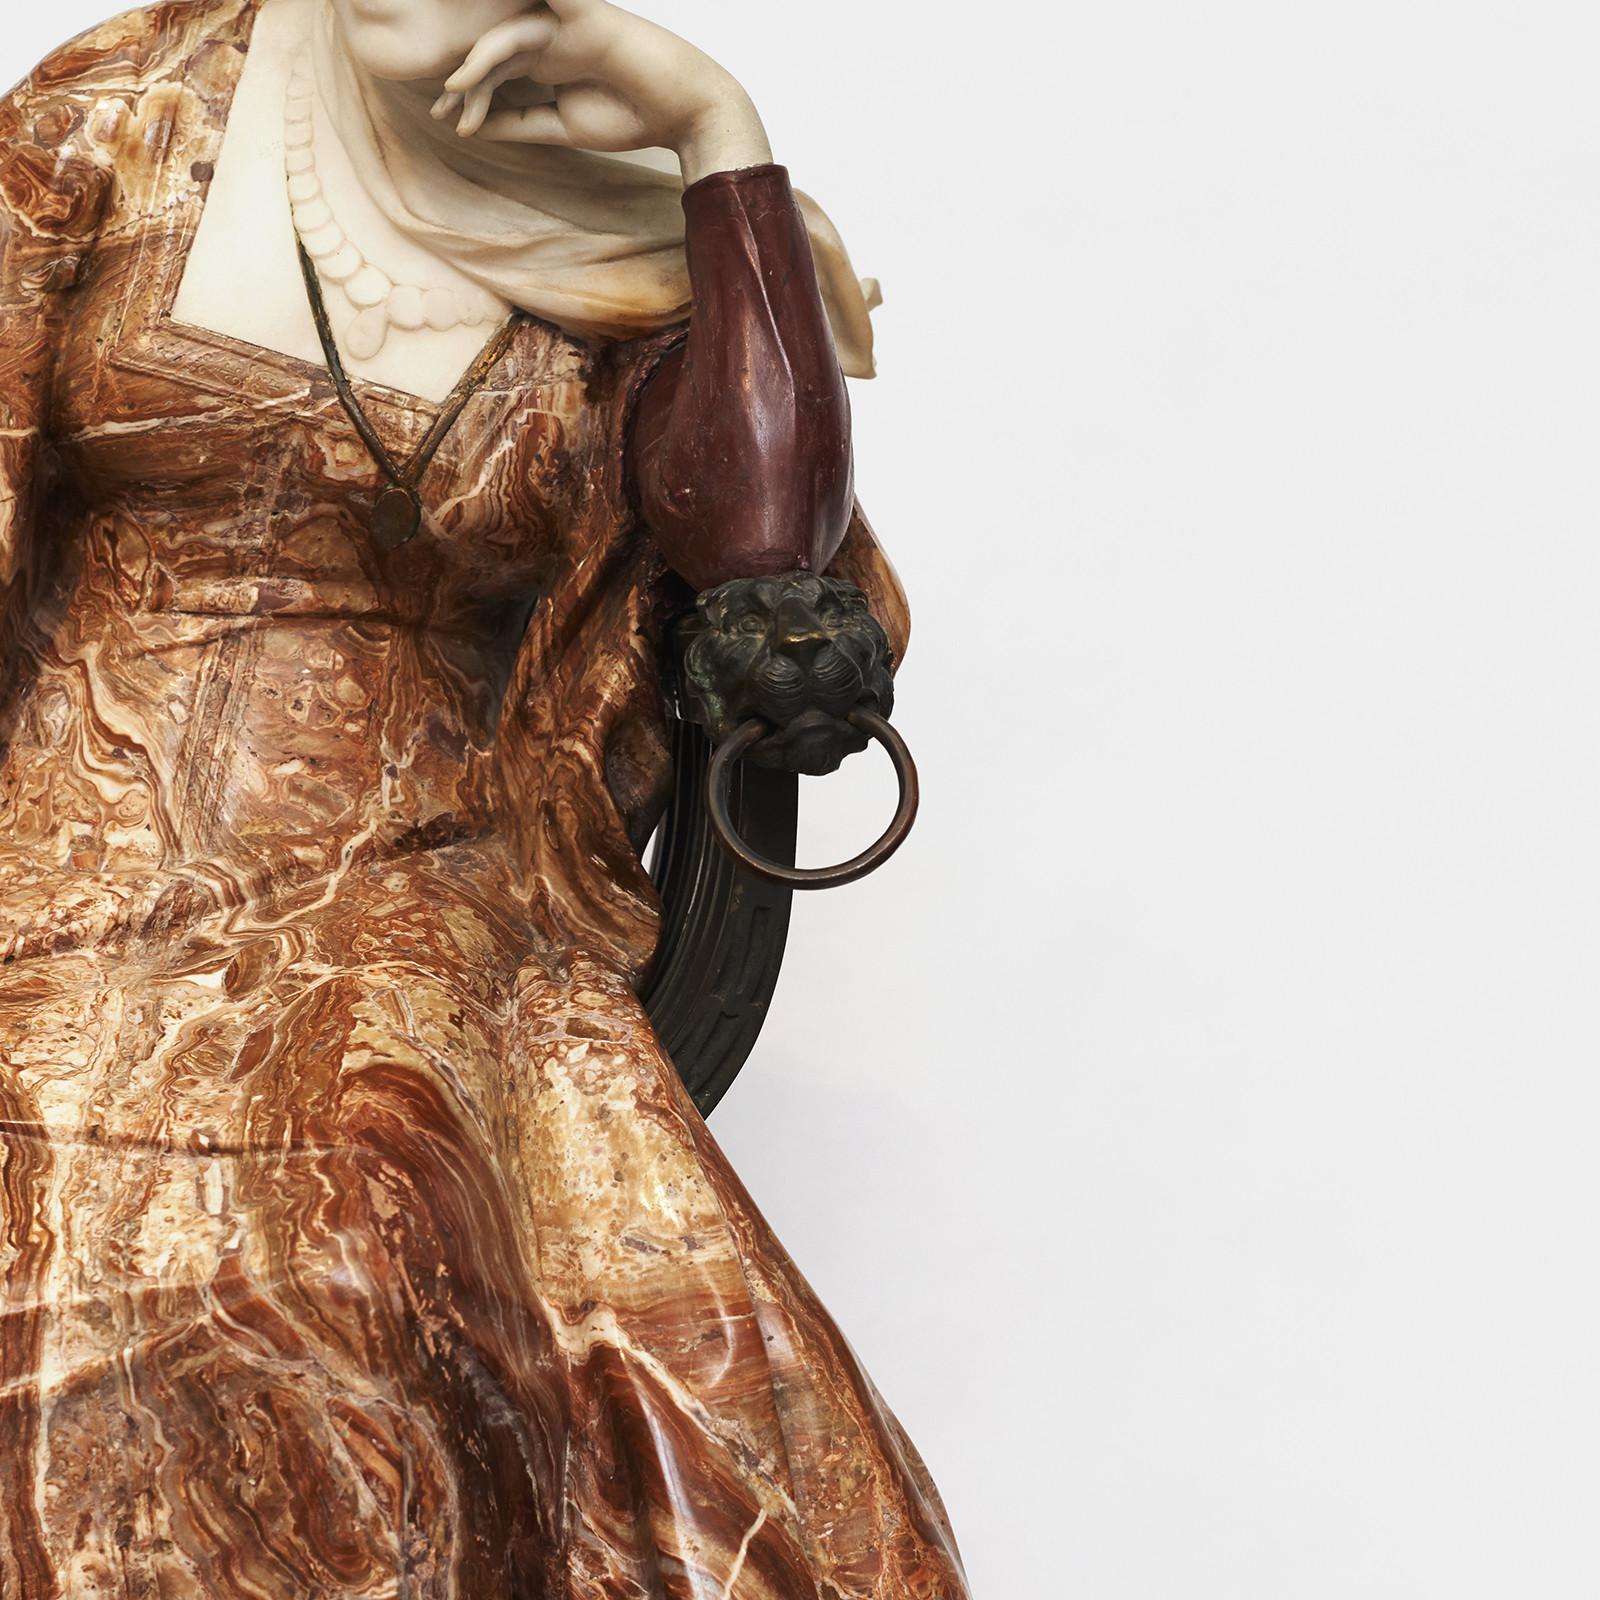 Ferdinando Vichi Marble Sculpture Sitting Woman On Pedestal For Sale 2